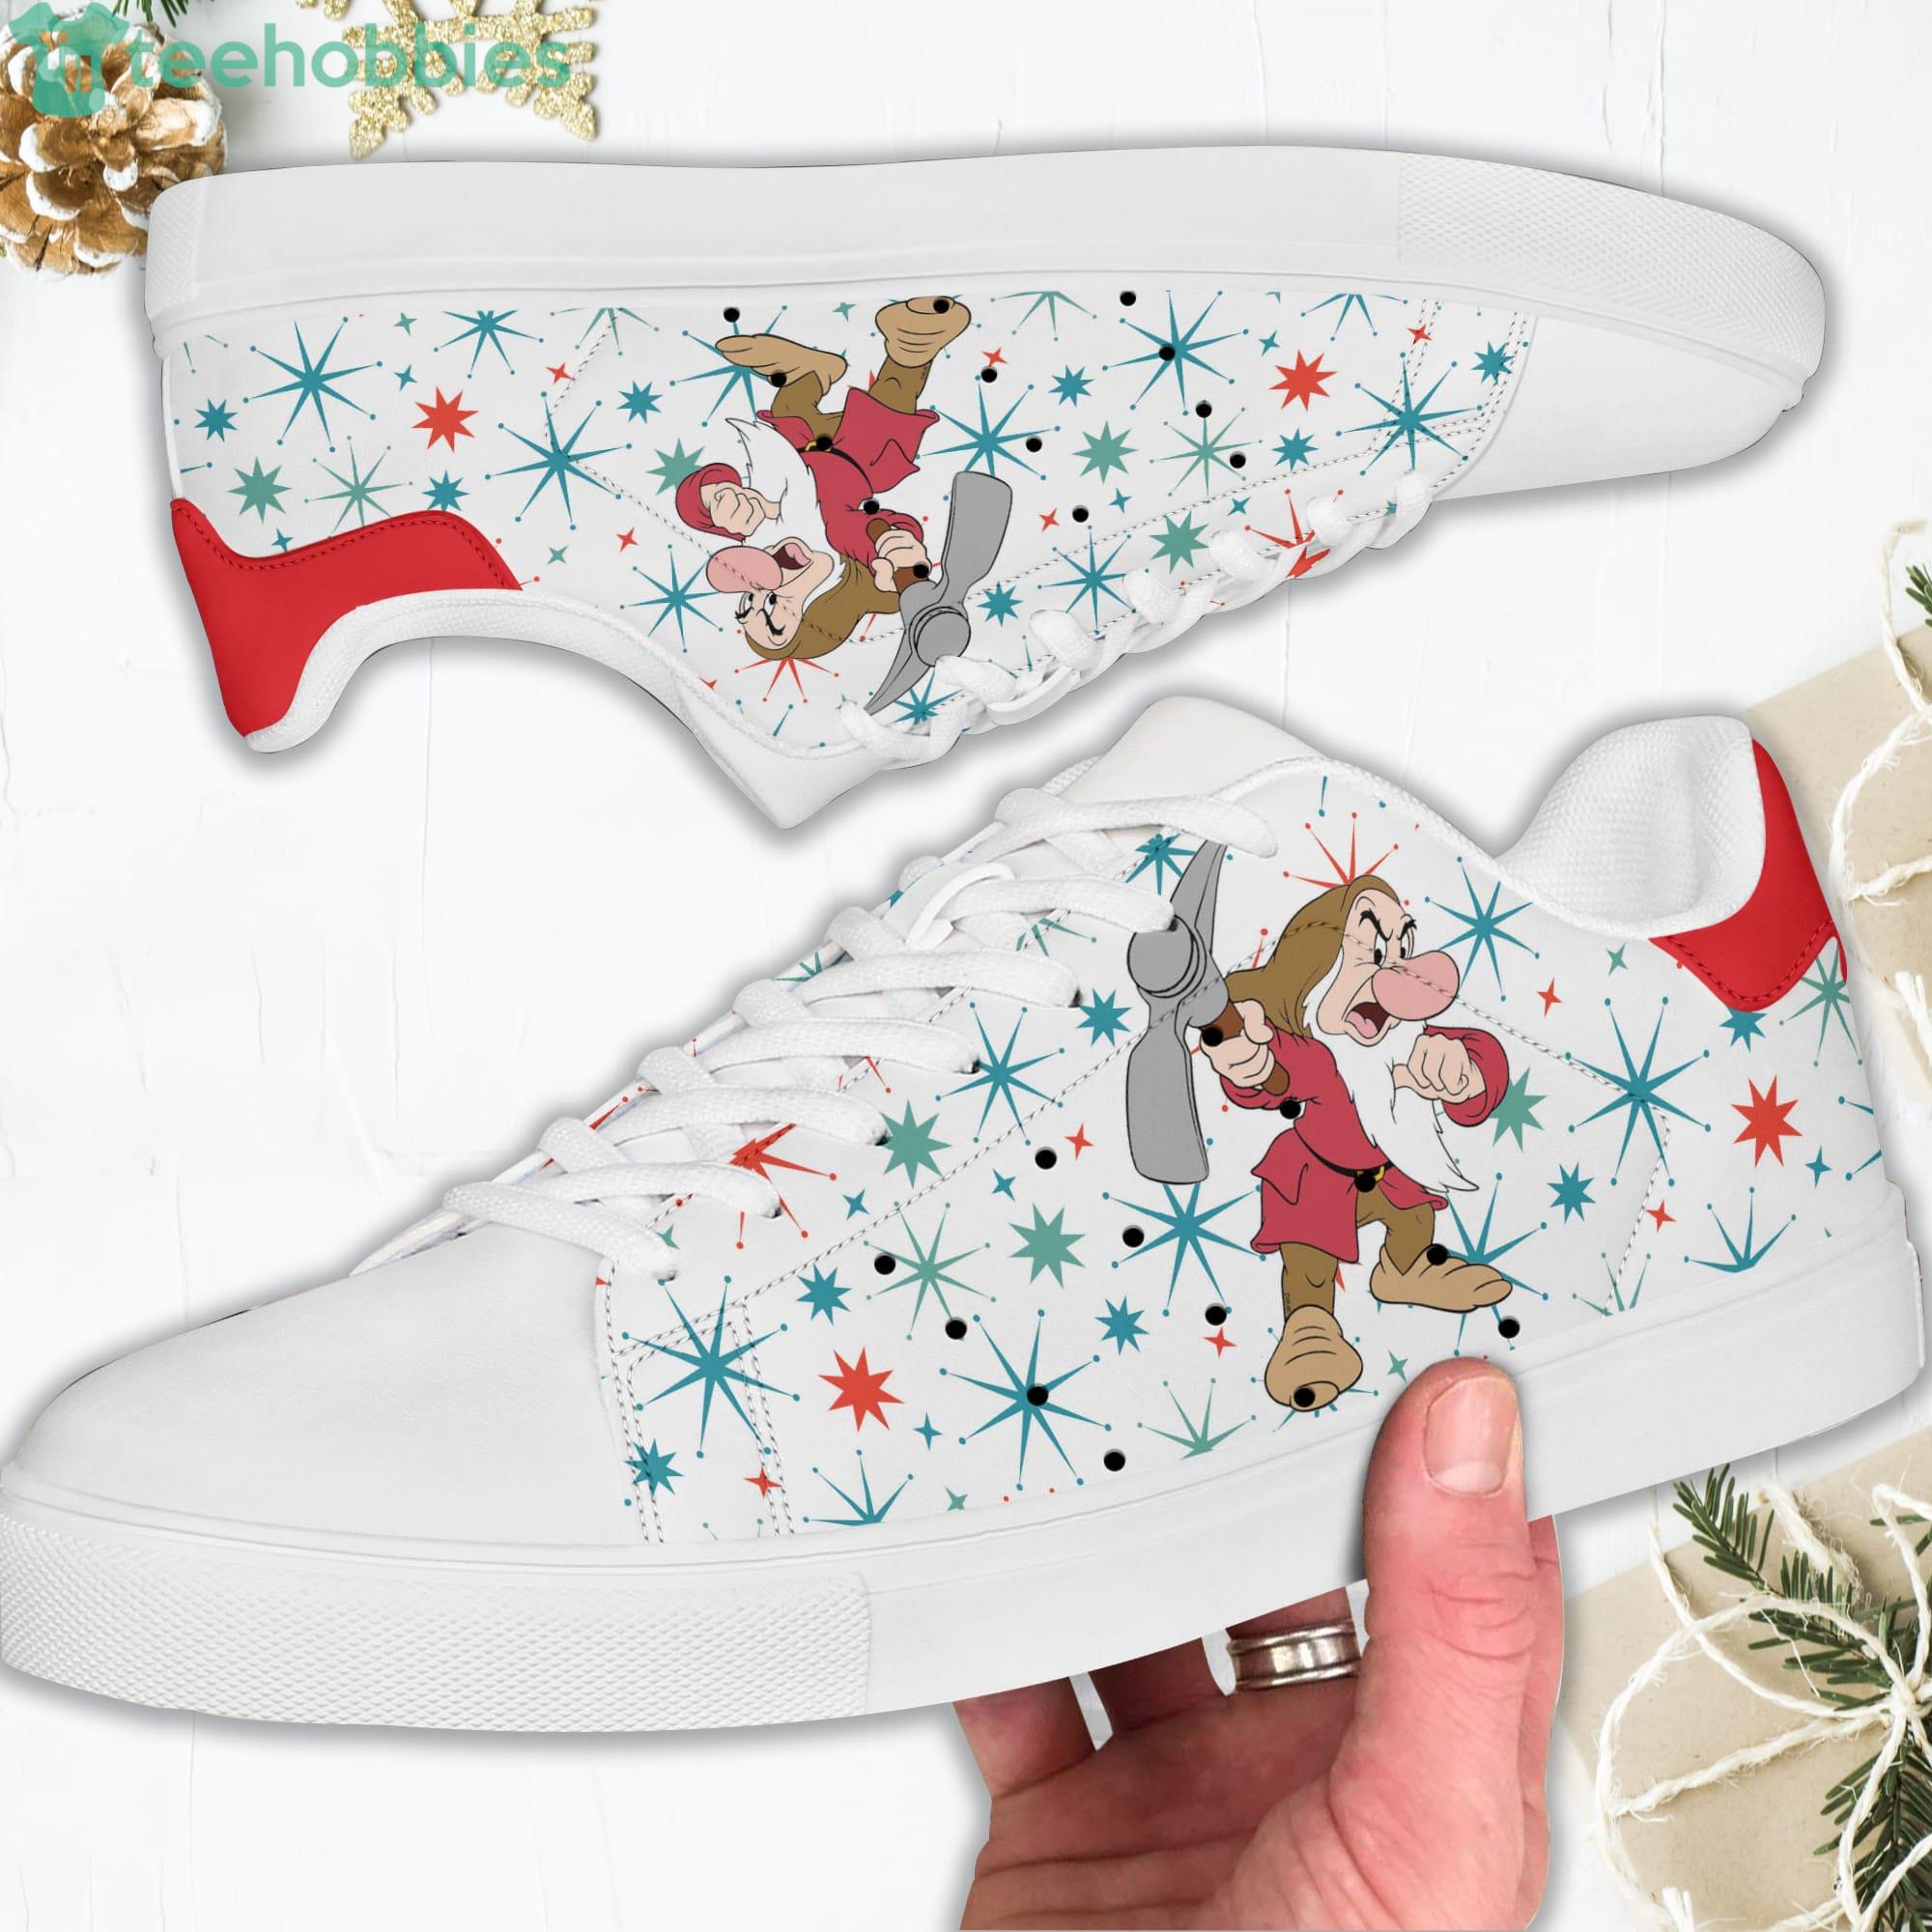 Grumpy Dwarf Red White Stan Smith Disney Carrtoon Low Top Skate Shoes Product Photo 1